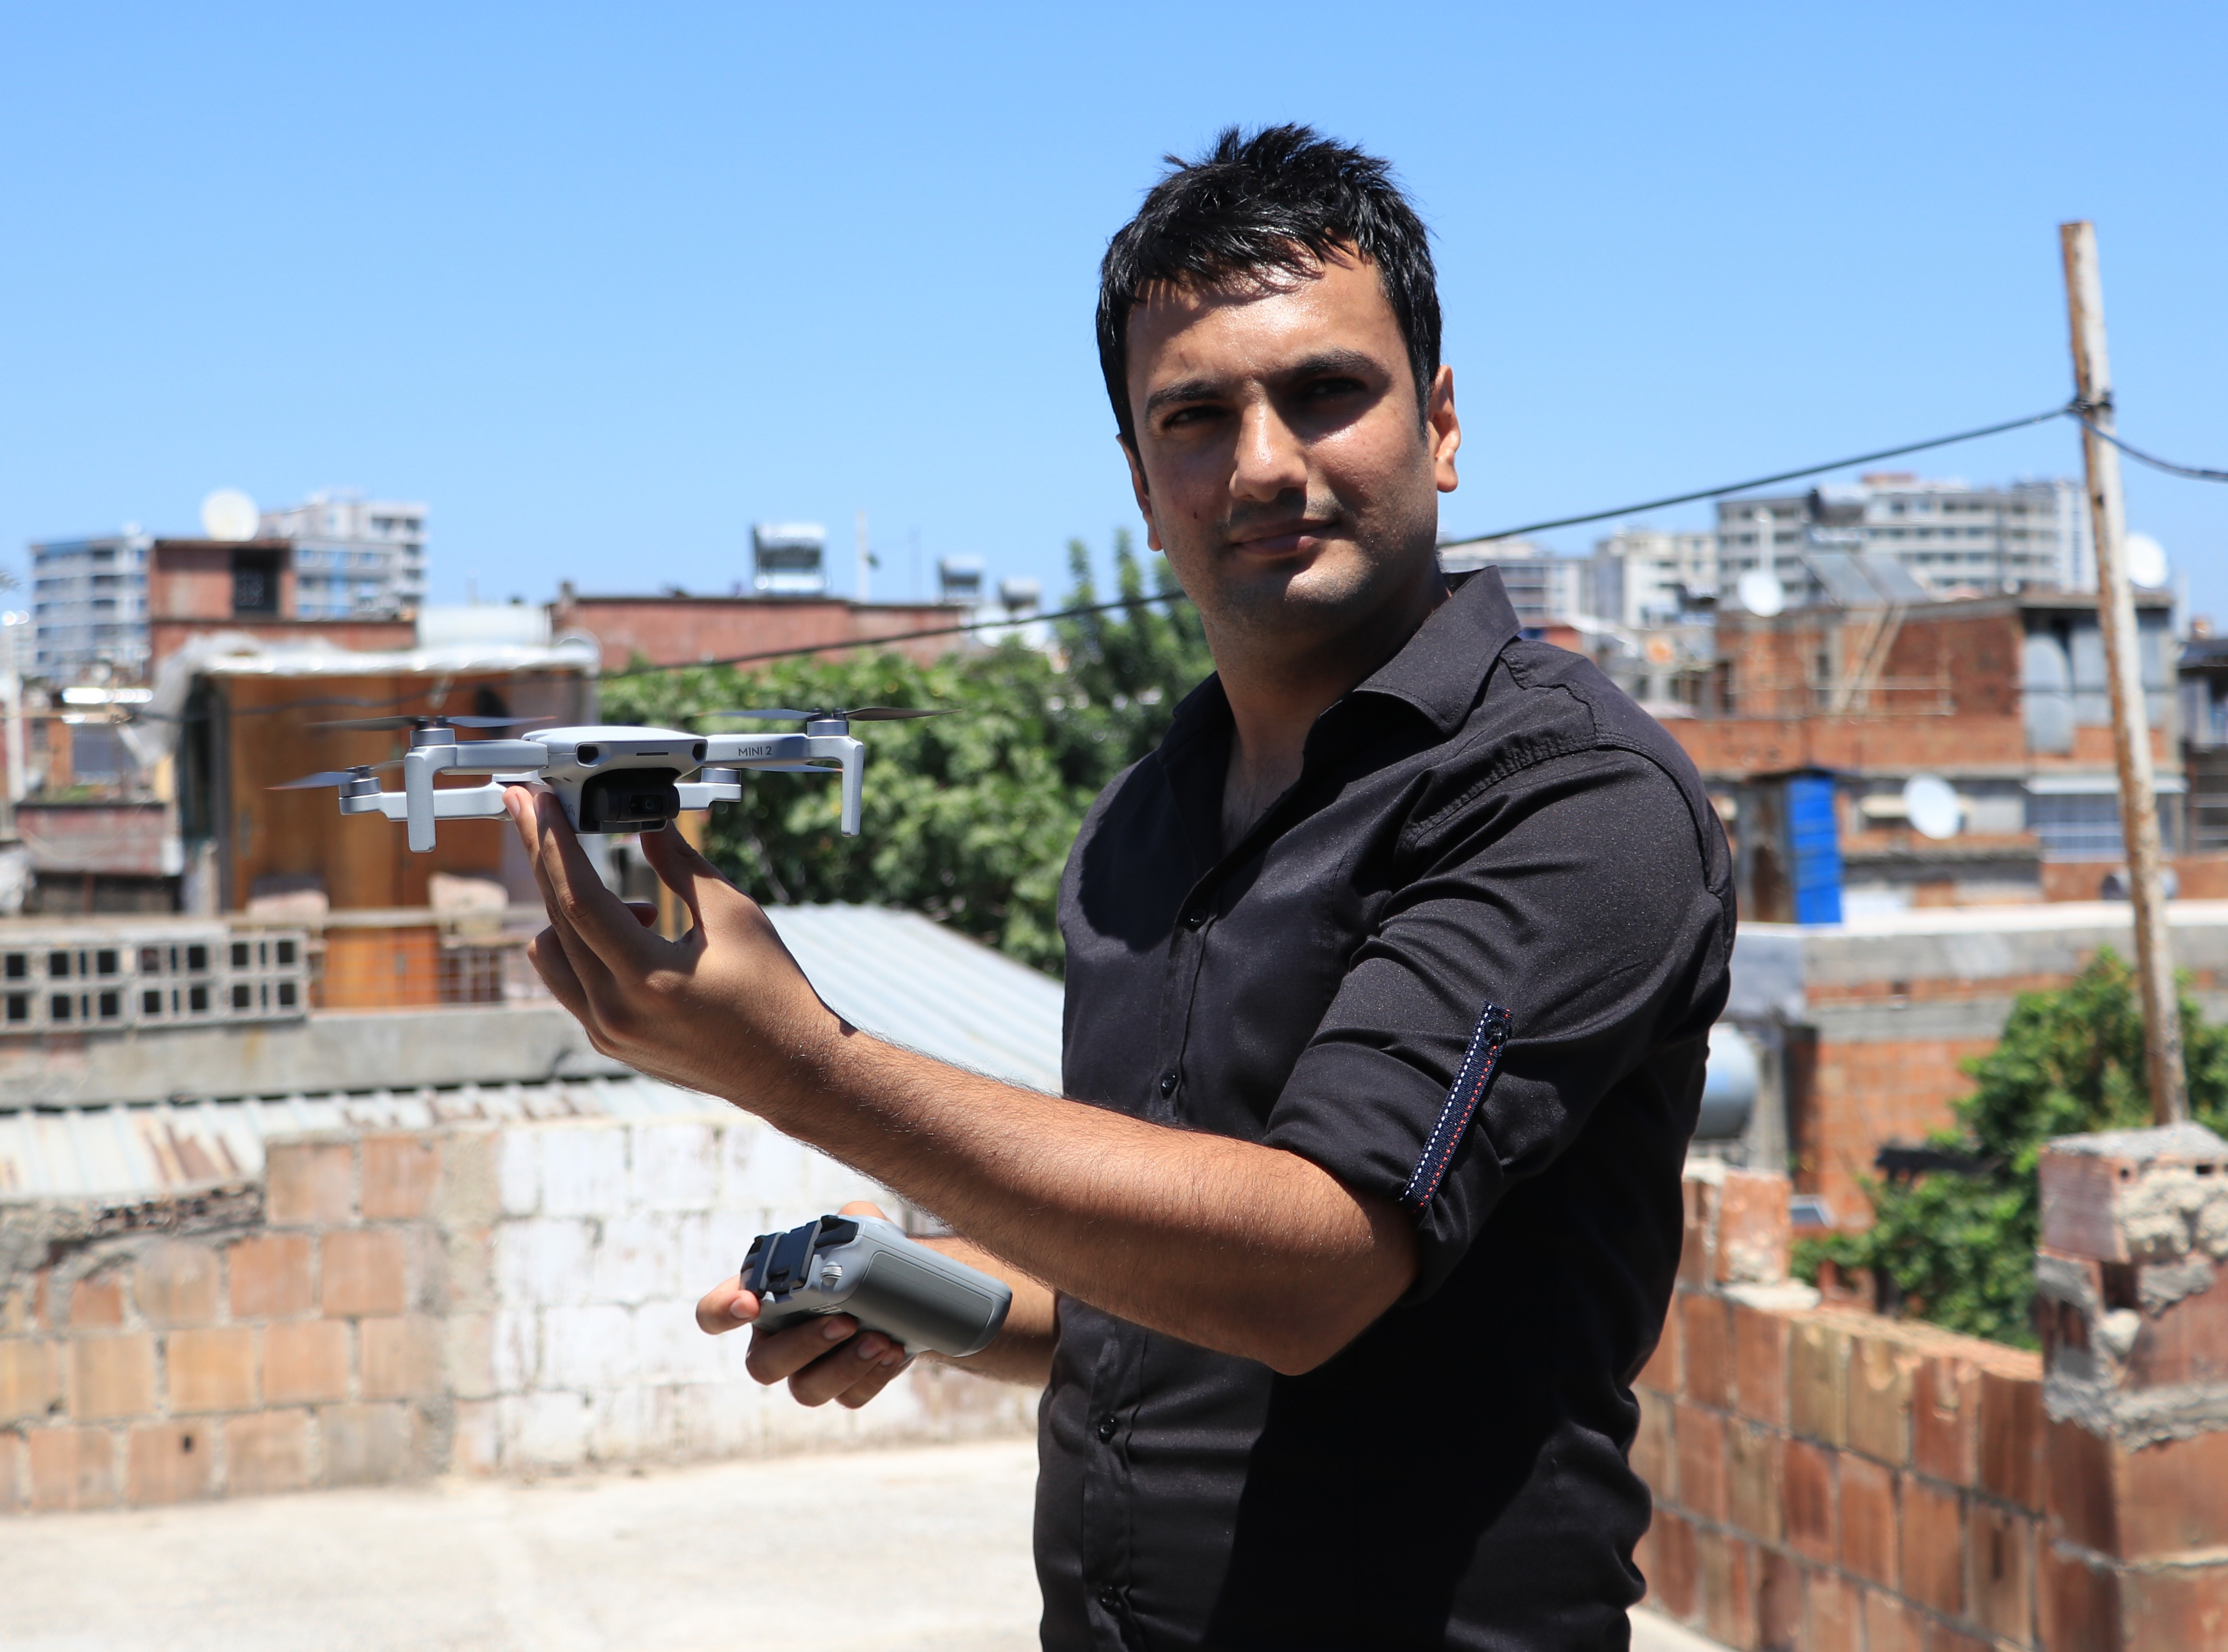 Yer: Adana... 2 buuk kilometre uzaa drone ile kebap servisi